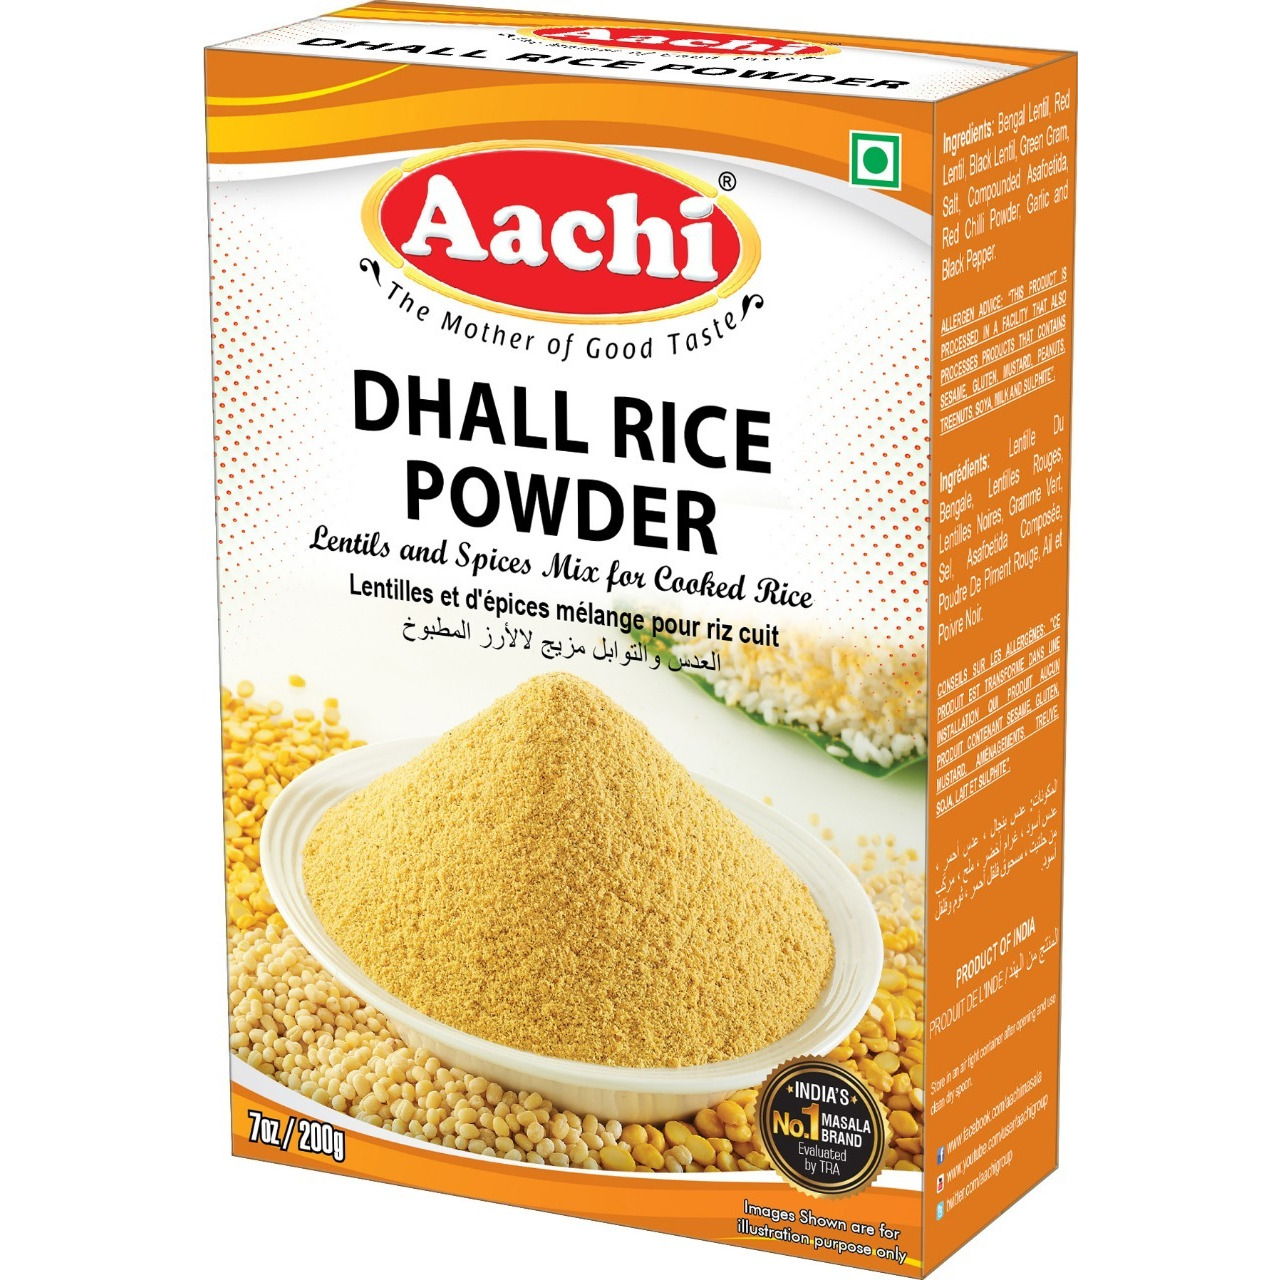 Aachi Dhall Rice Powder - 200 Gm (7 Oz)